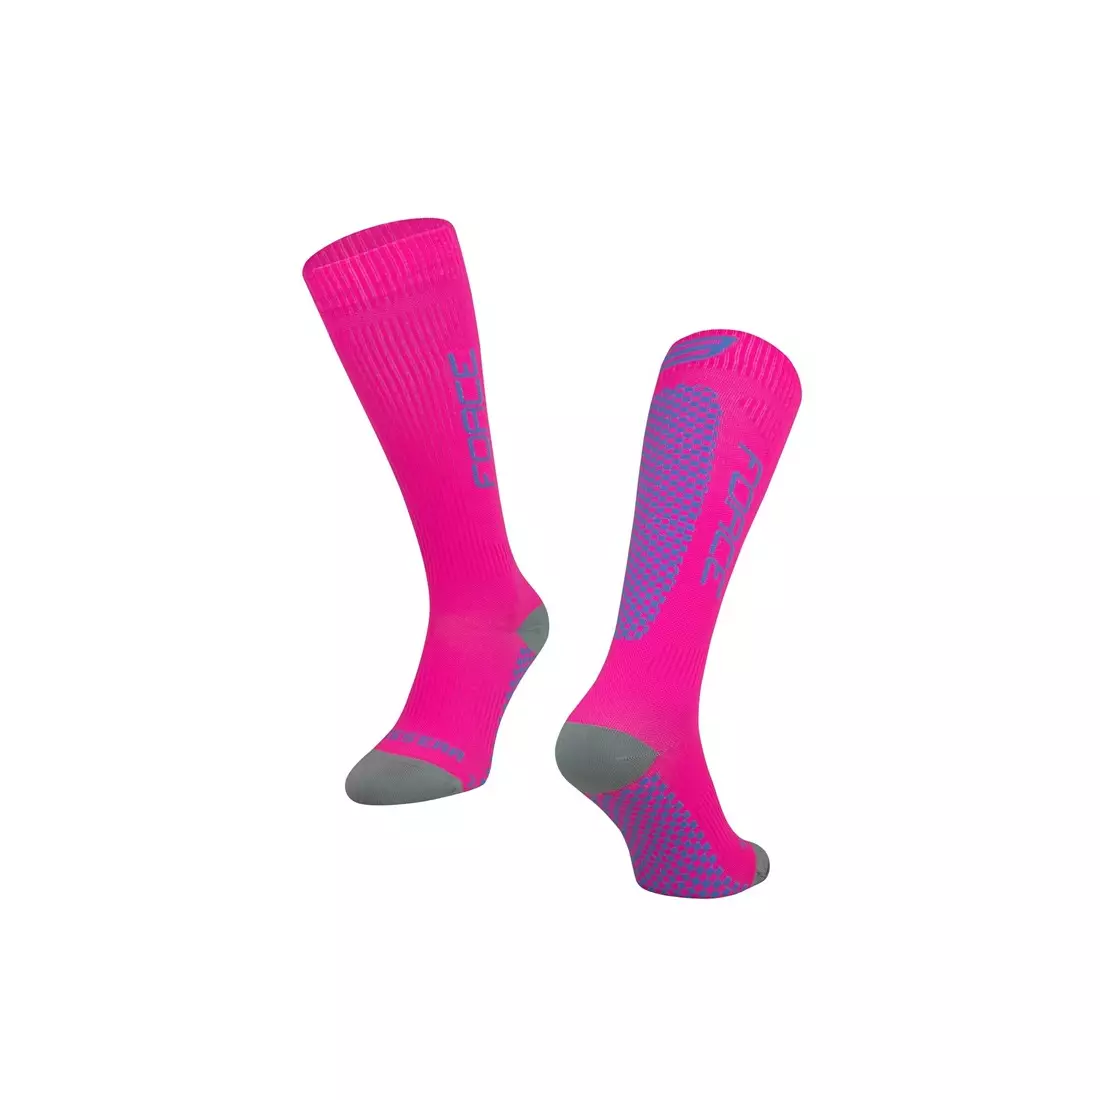 FORCE TESSERA COMPRESSION compression socks, pink-purple